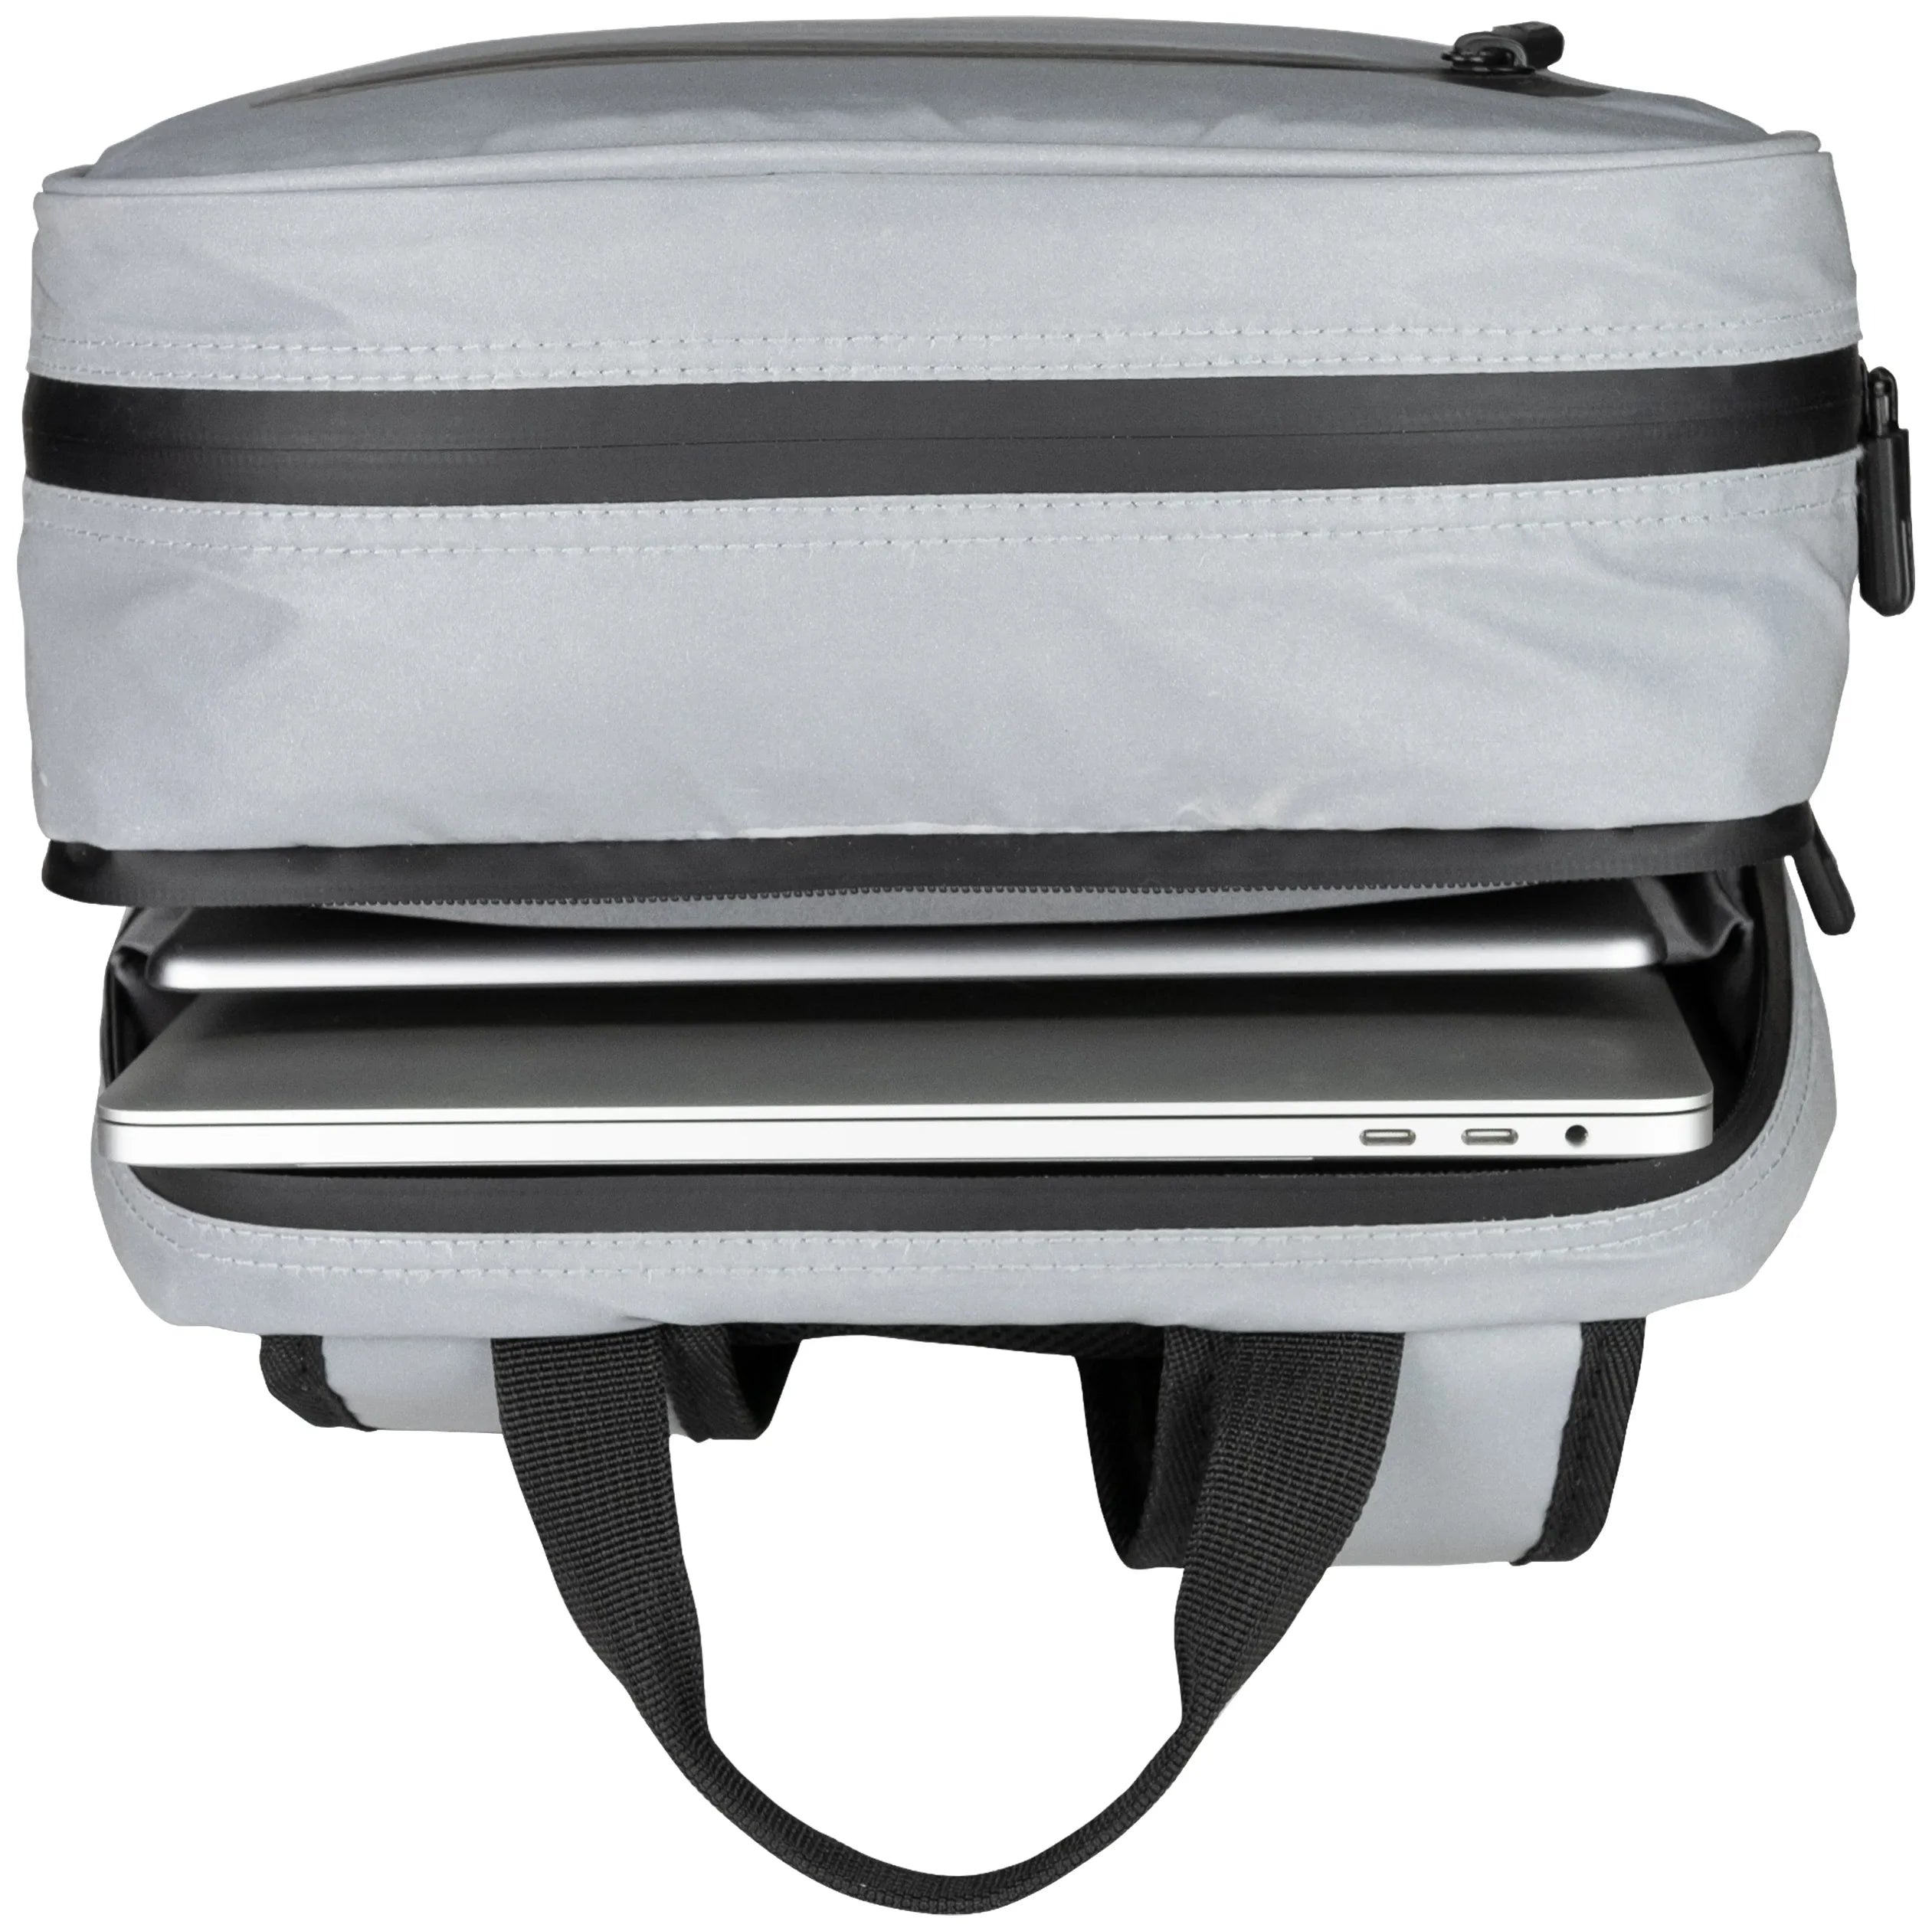 Oak25 Luminant Bag Reflective Backpack 44 cm - Grey/Black